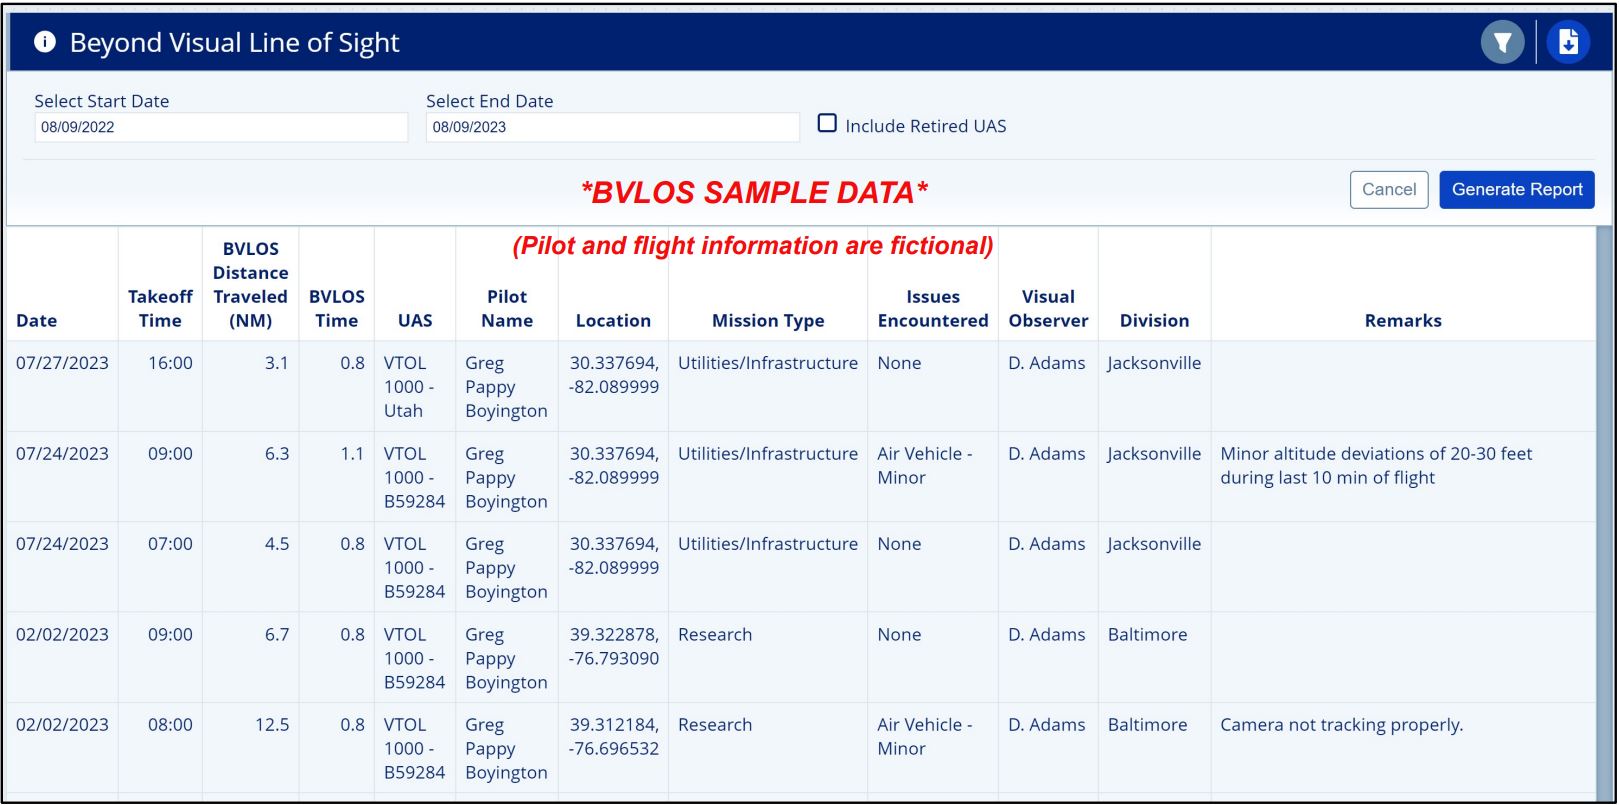 BVLOS sample data